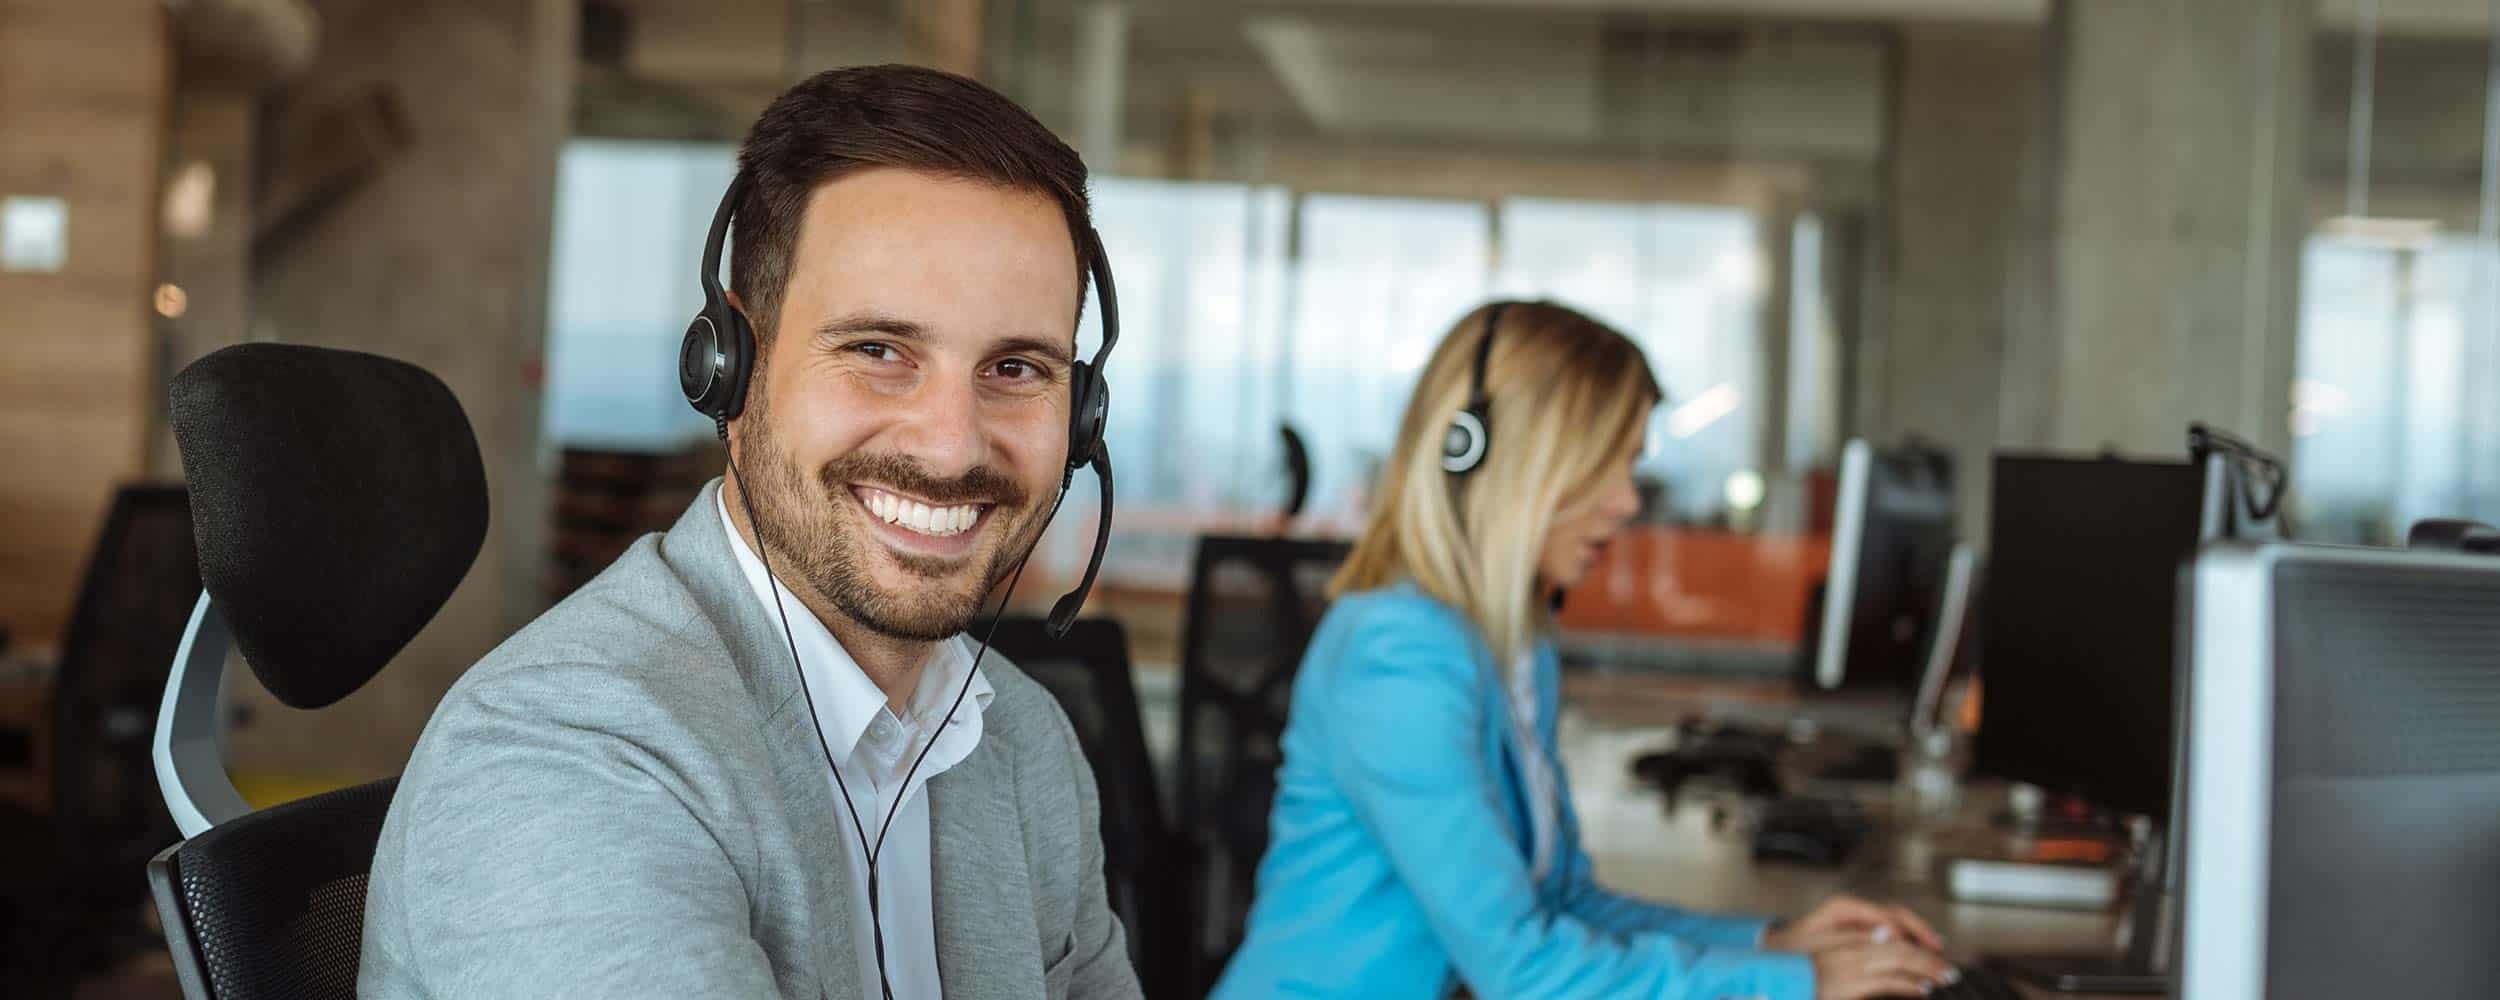 myoutdesk Inside Sales Agent Virtual Assistant smiling